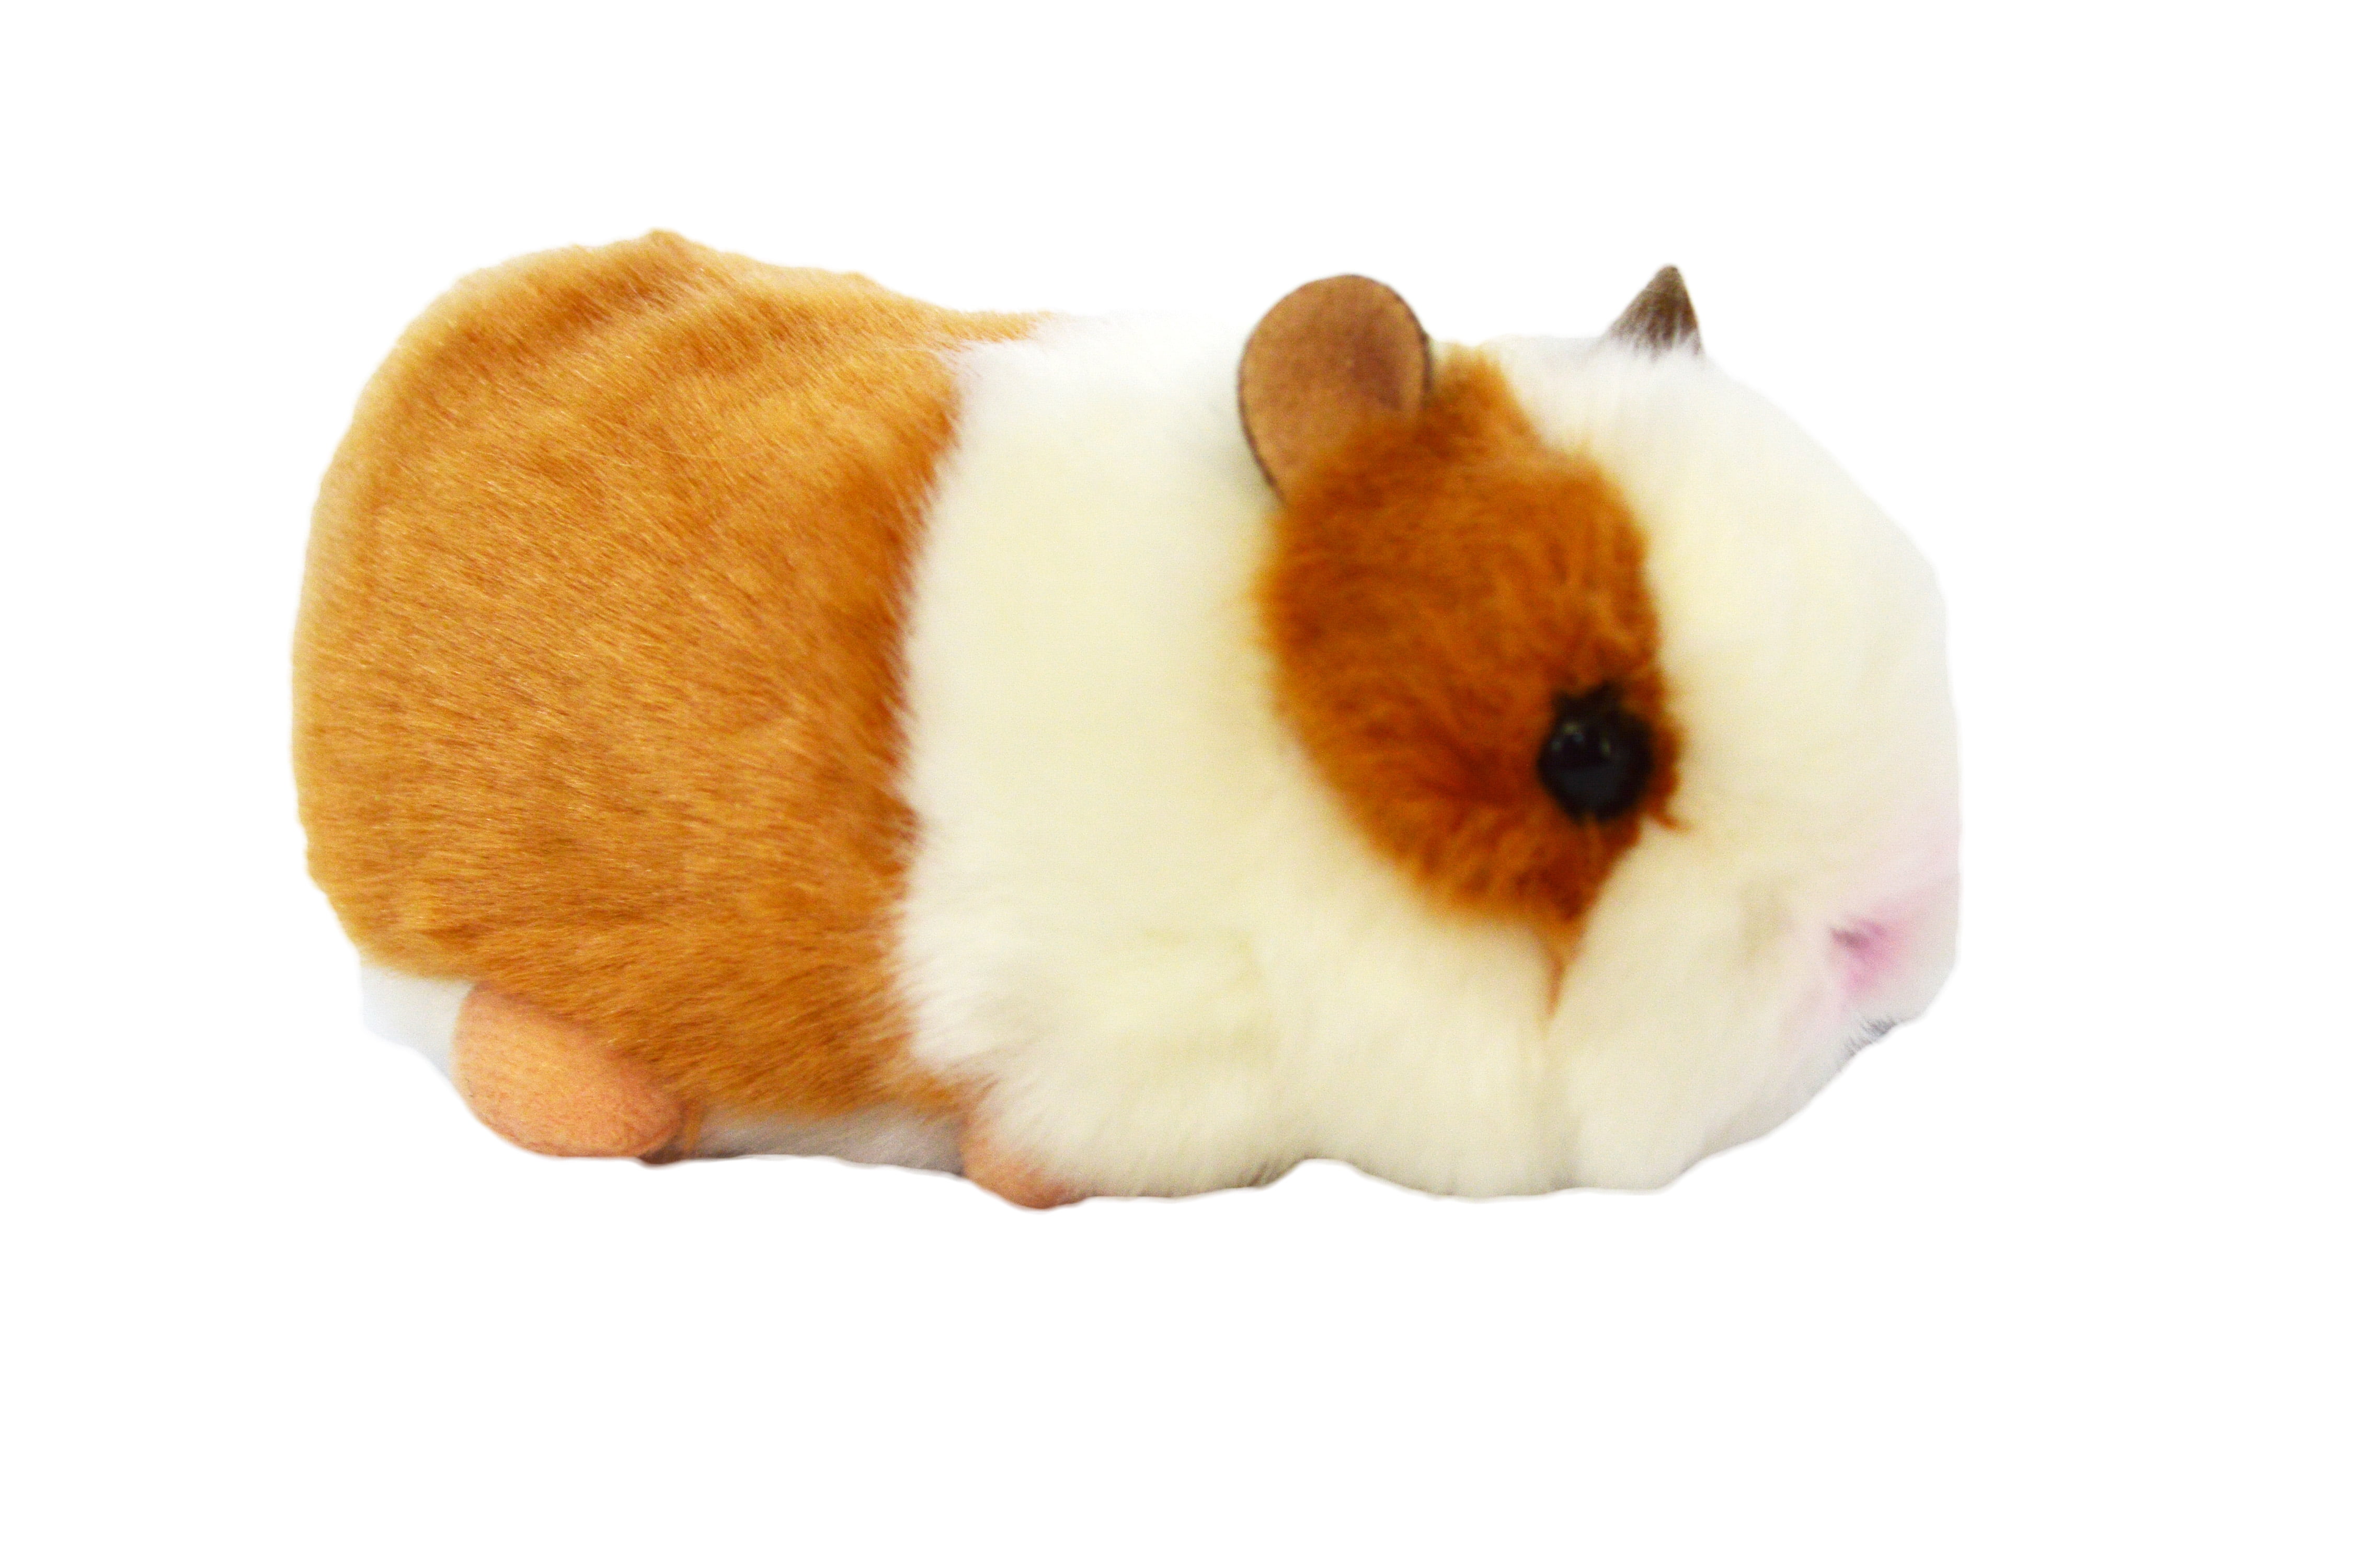 VIAHART Gigi The Guinea Pig6 Inch Stuffed Animal Plush by Tiger Tale Toys 